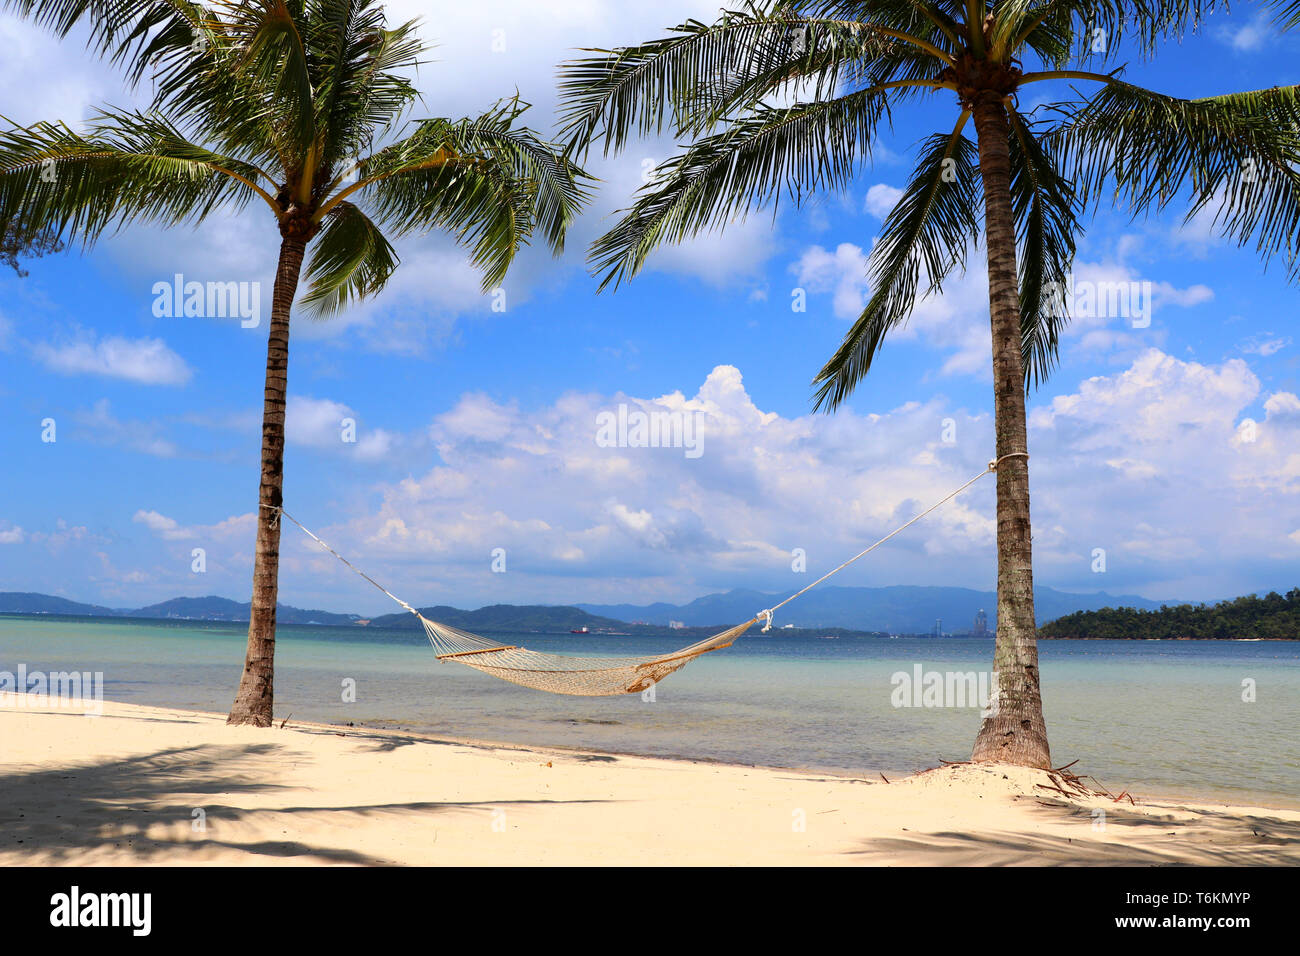 Two palm trees with a hammock on the beach - Gaya Island Malaysia Asia Stock Photo